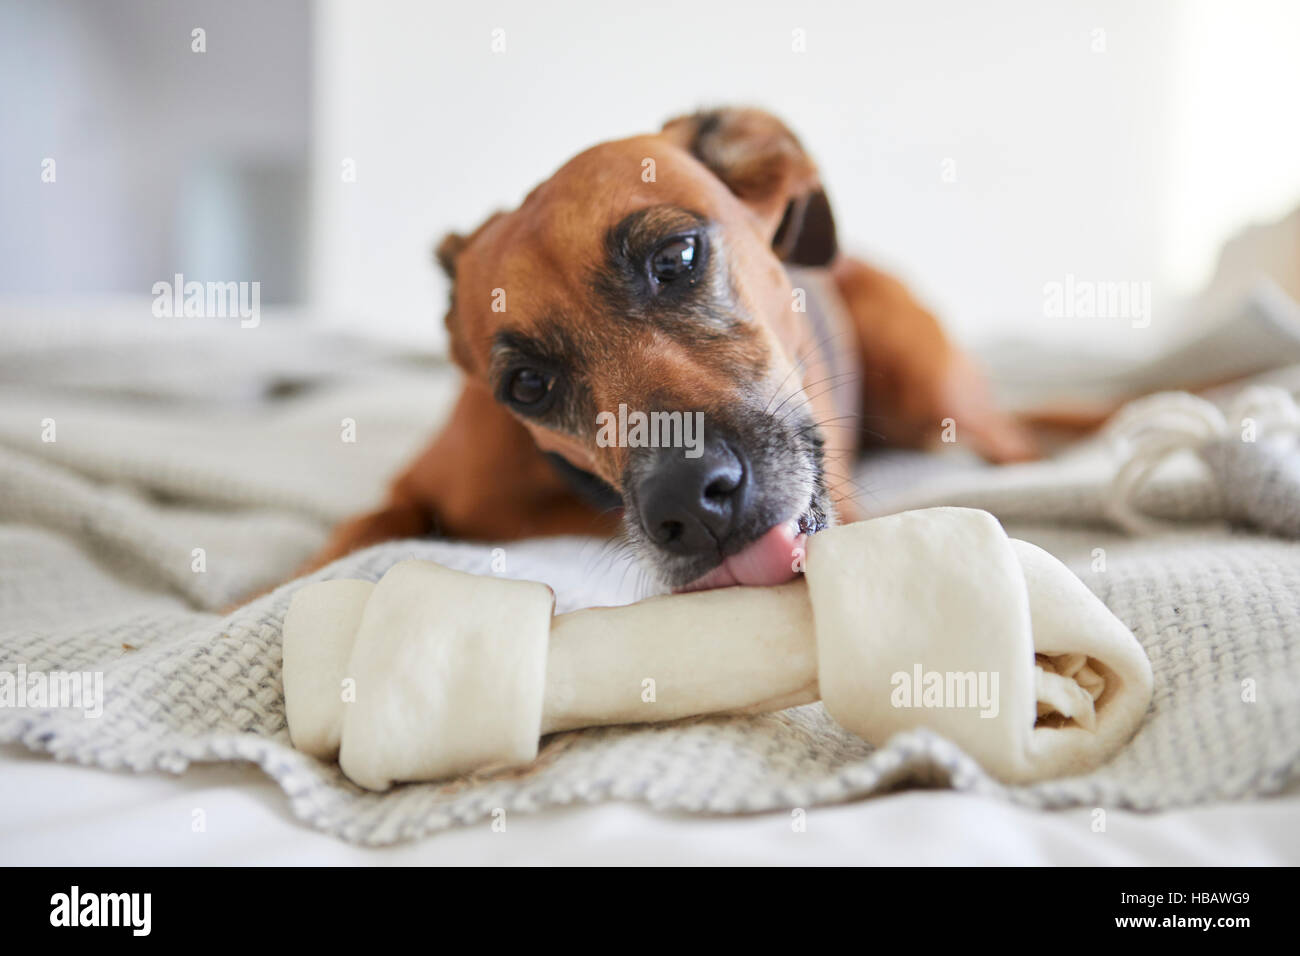 Hund auf Decke lecken Hundeknochen Stockfoto